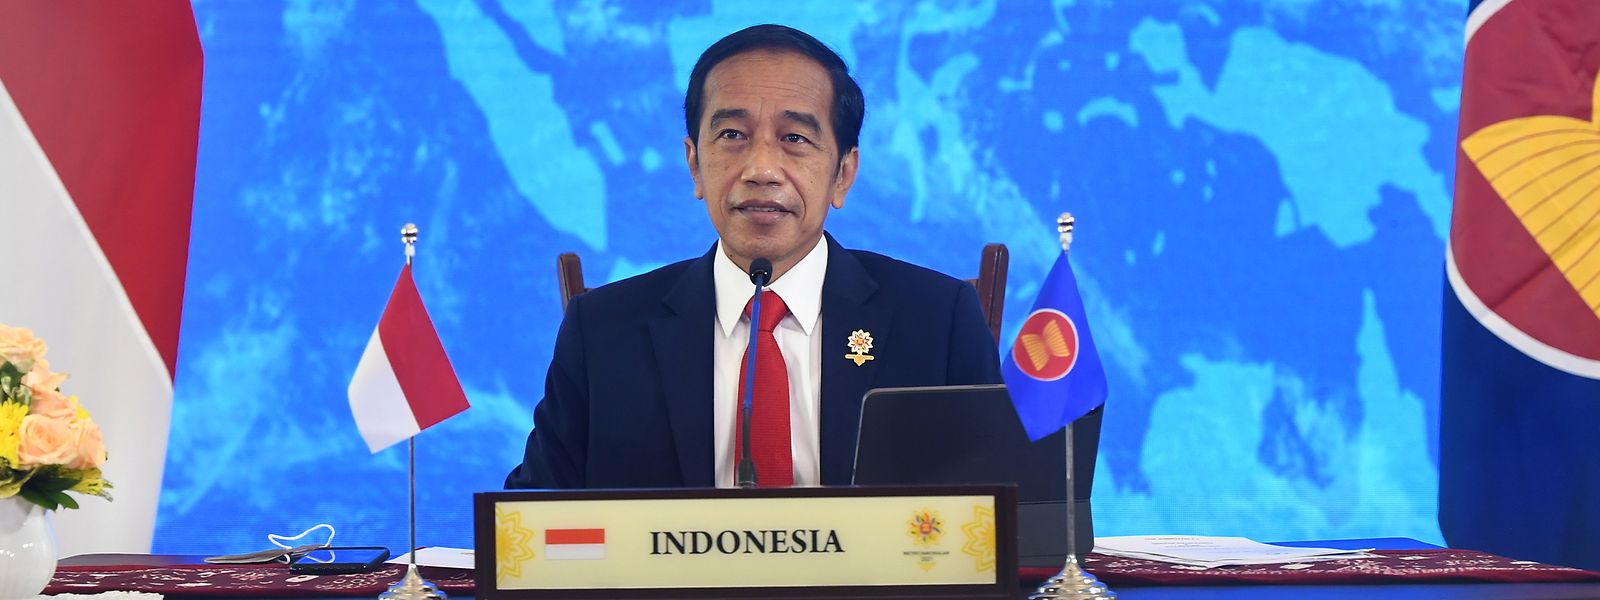 Presidente da Indonésia, Joko Widodo